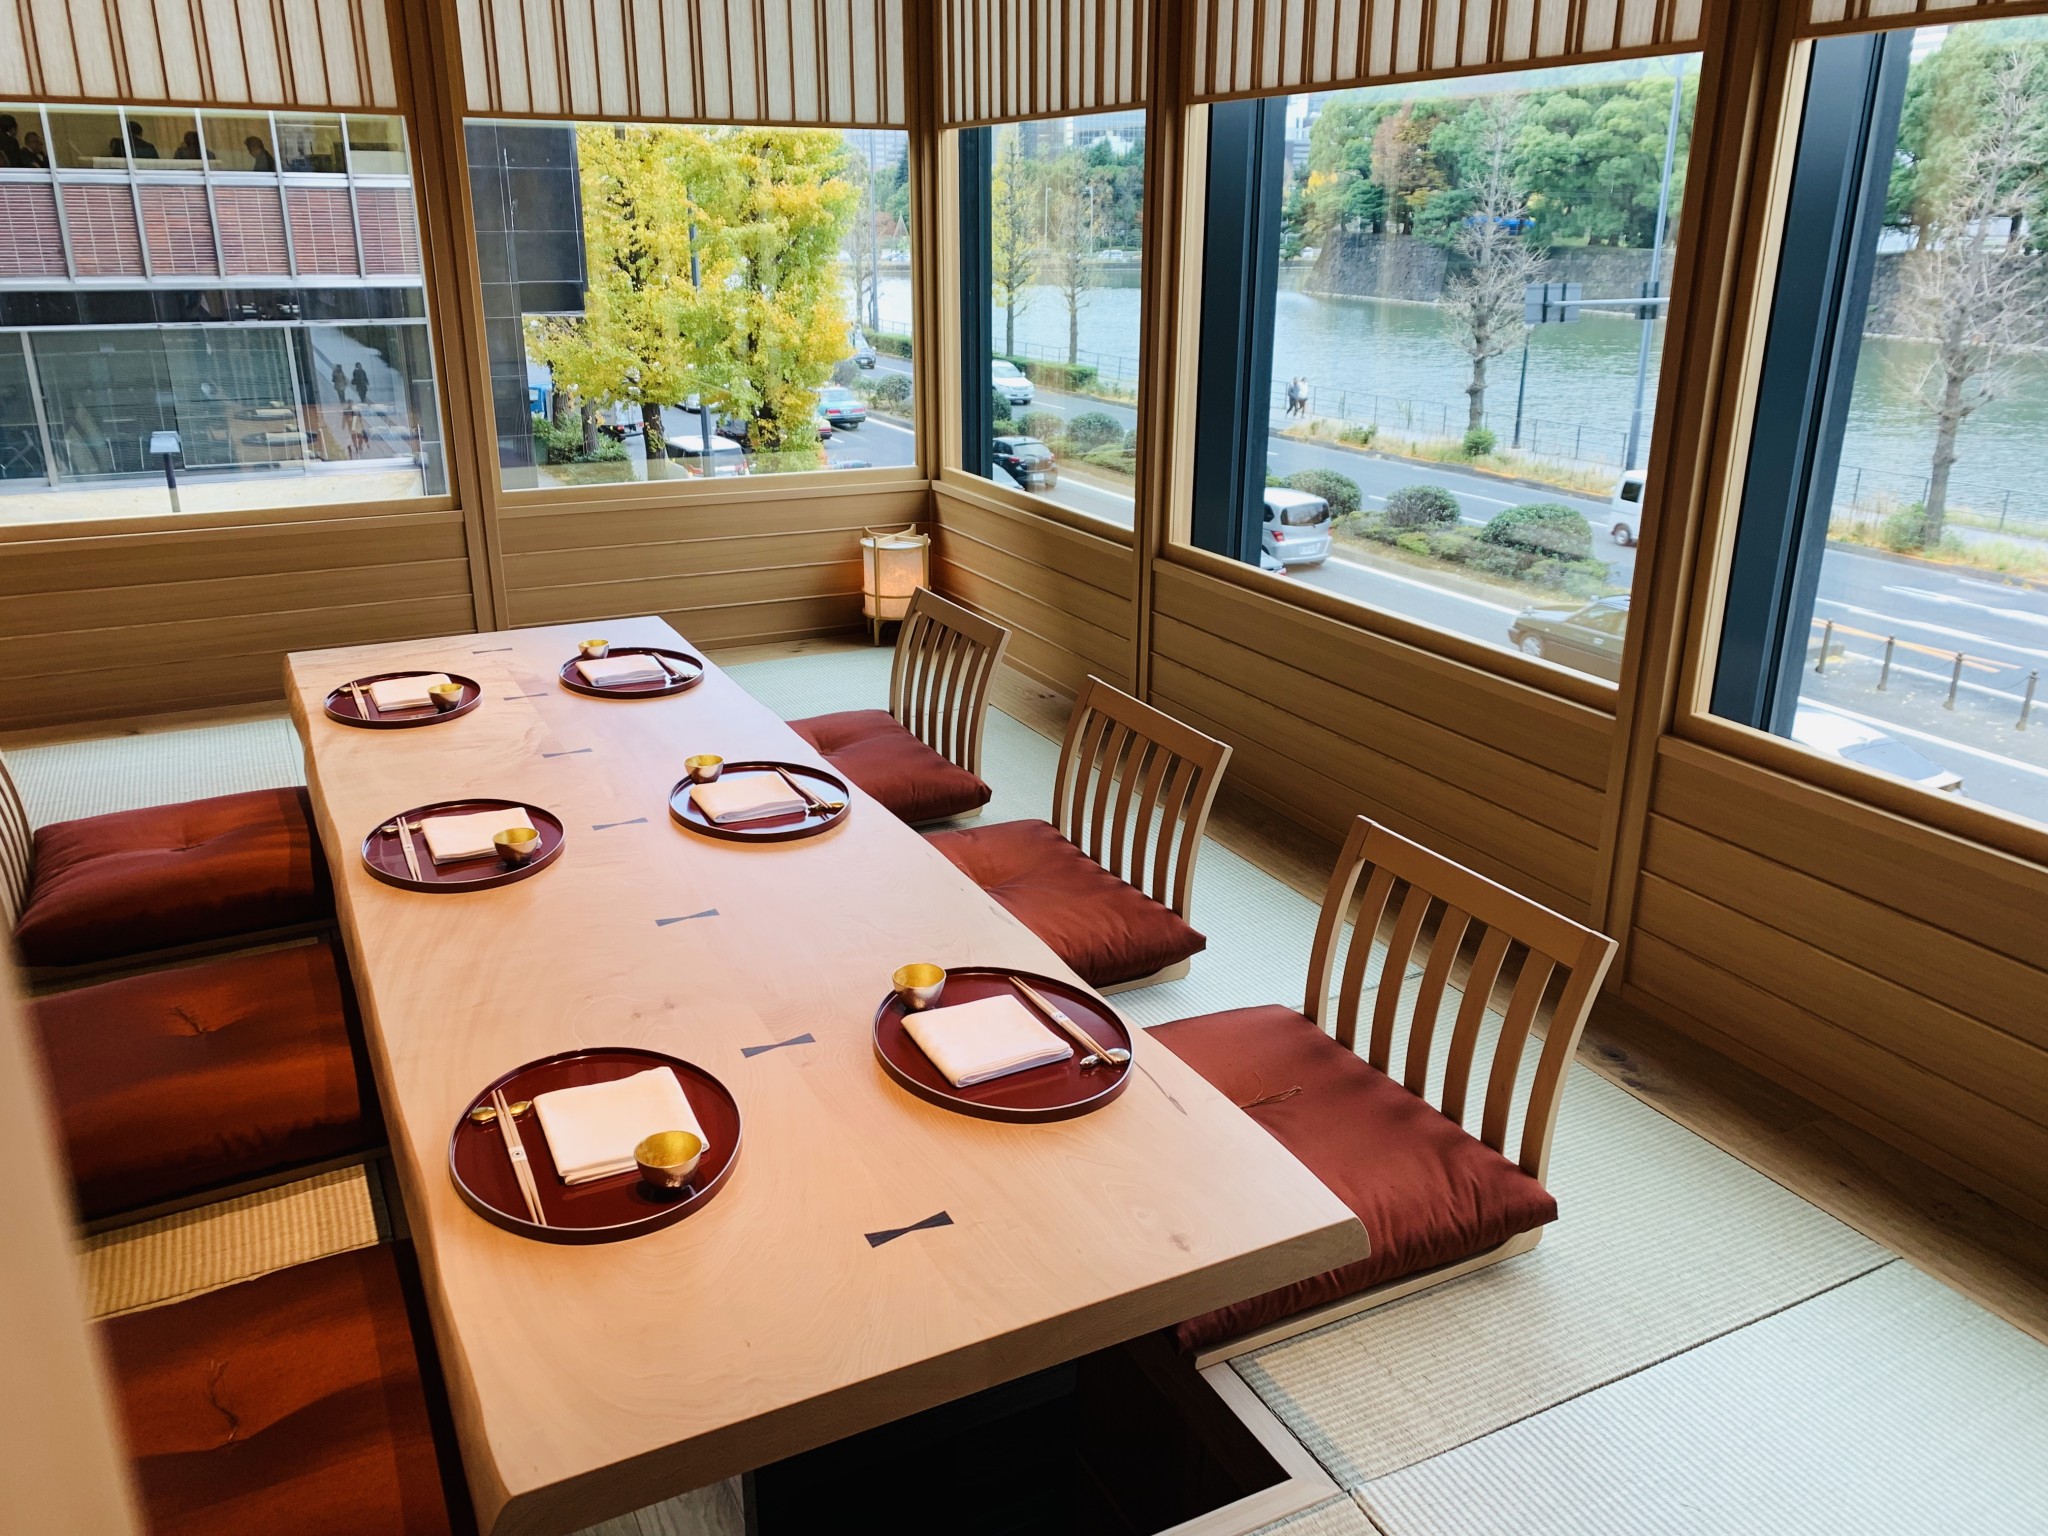 日本料理店〈日本料理 八千代〉は個室が充実。